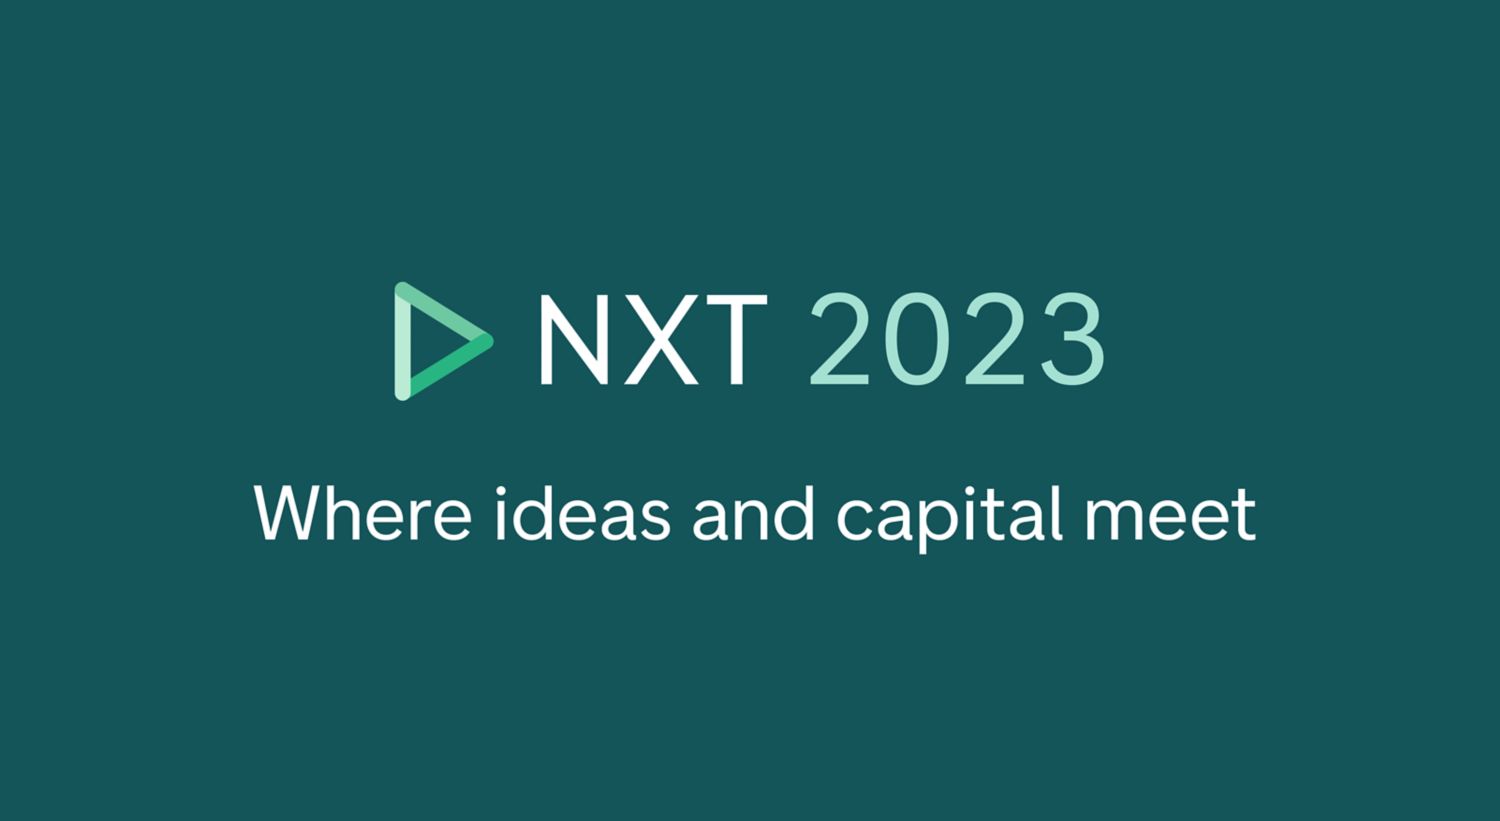 NXT 2023 Where ideas and capital meet